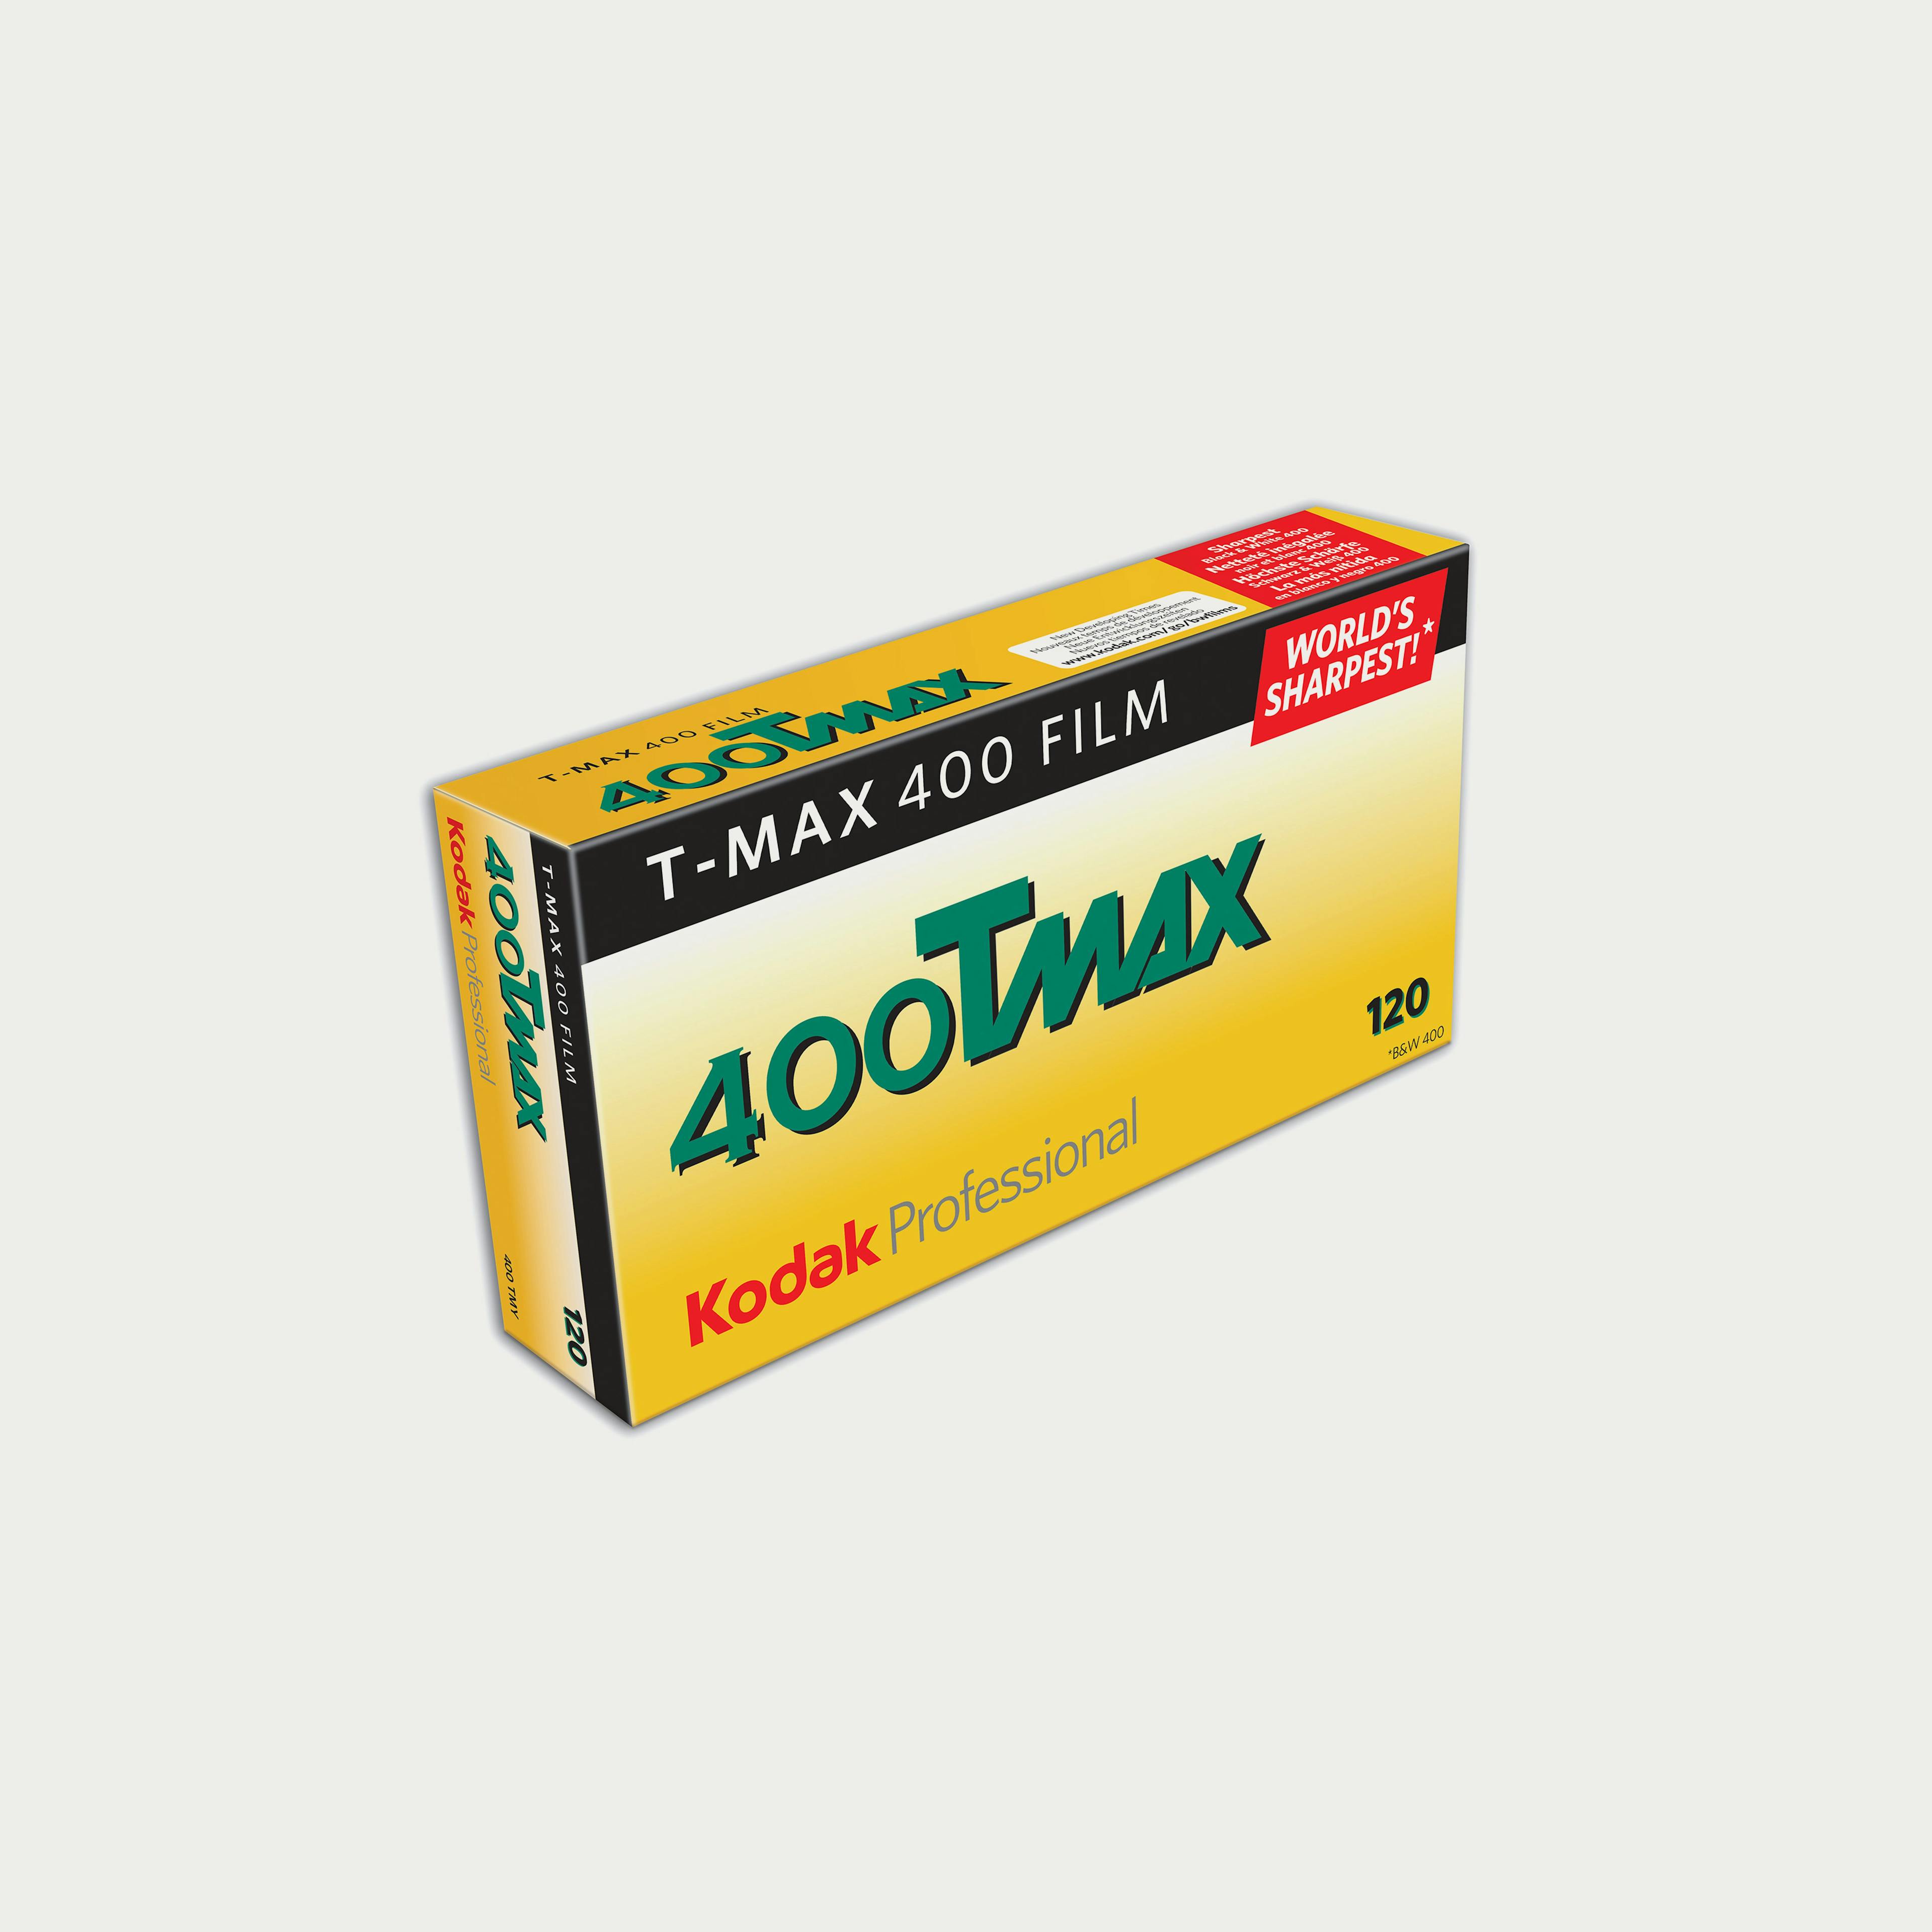 Professional T-Max 400 Black and White Negative 120 Film - 5 Rolls